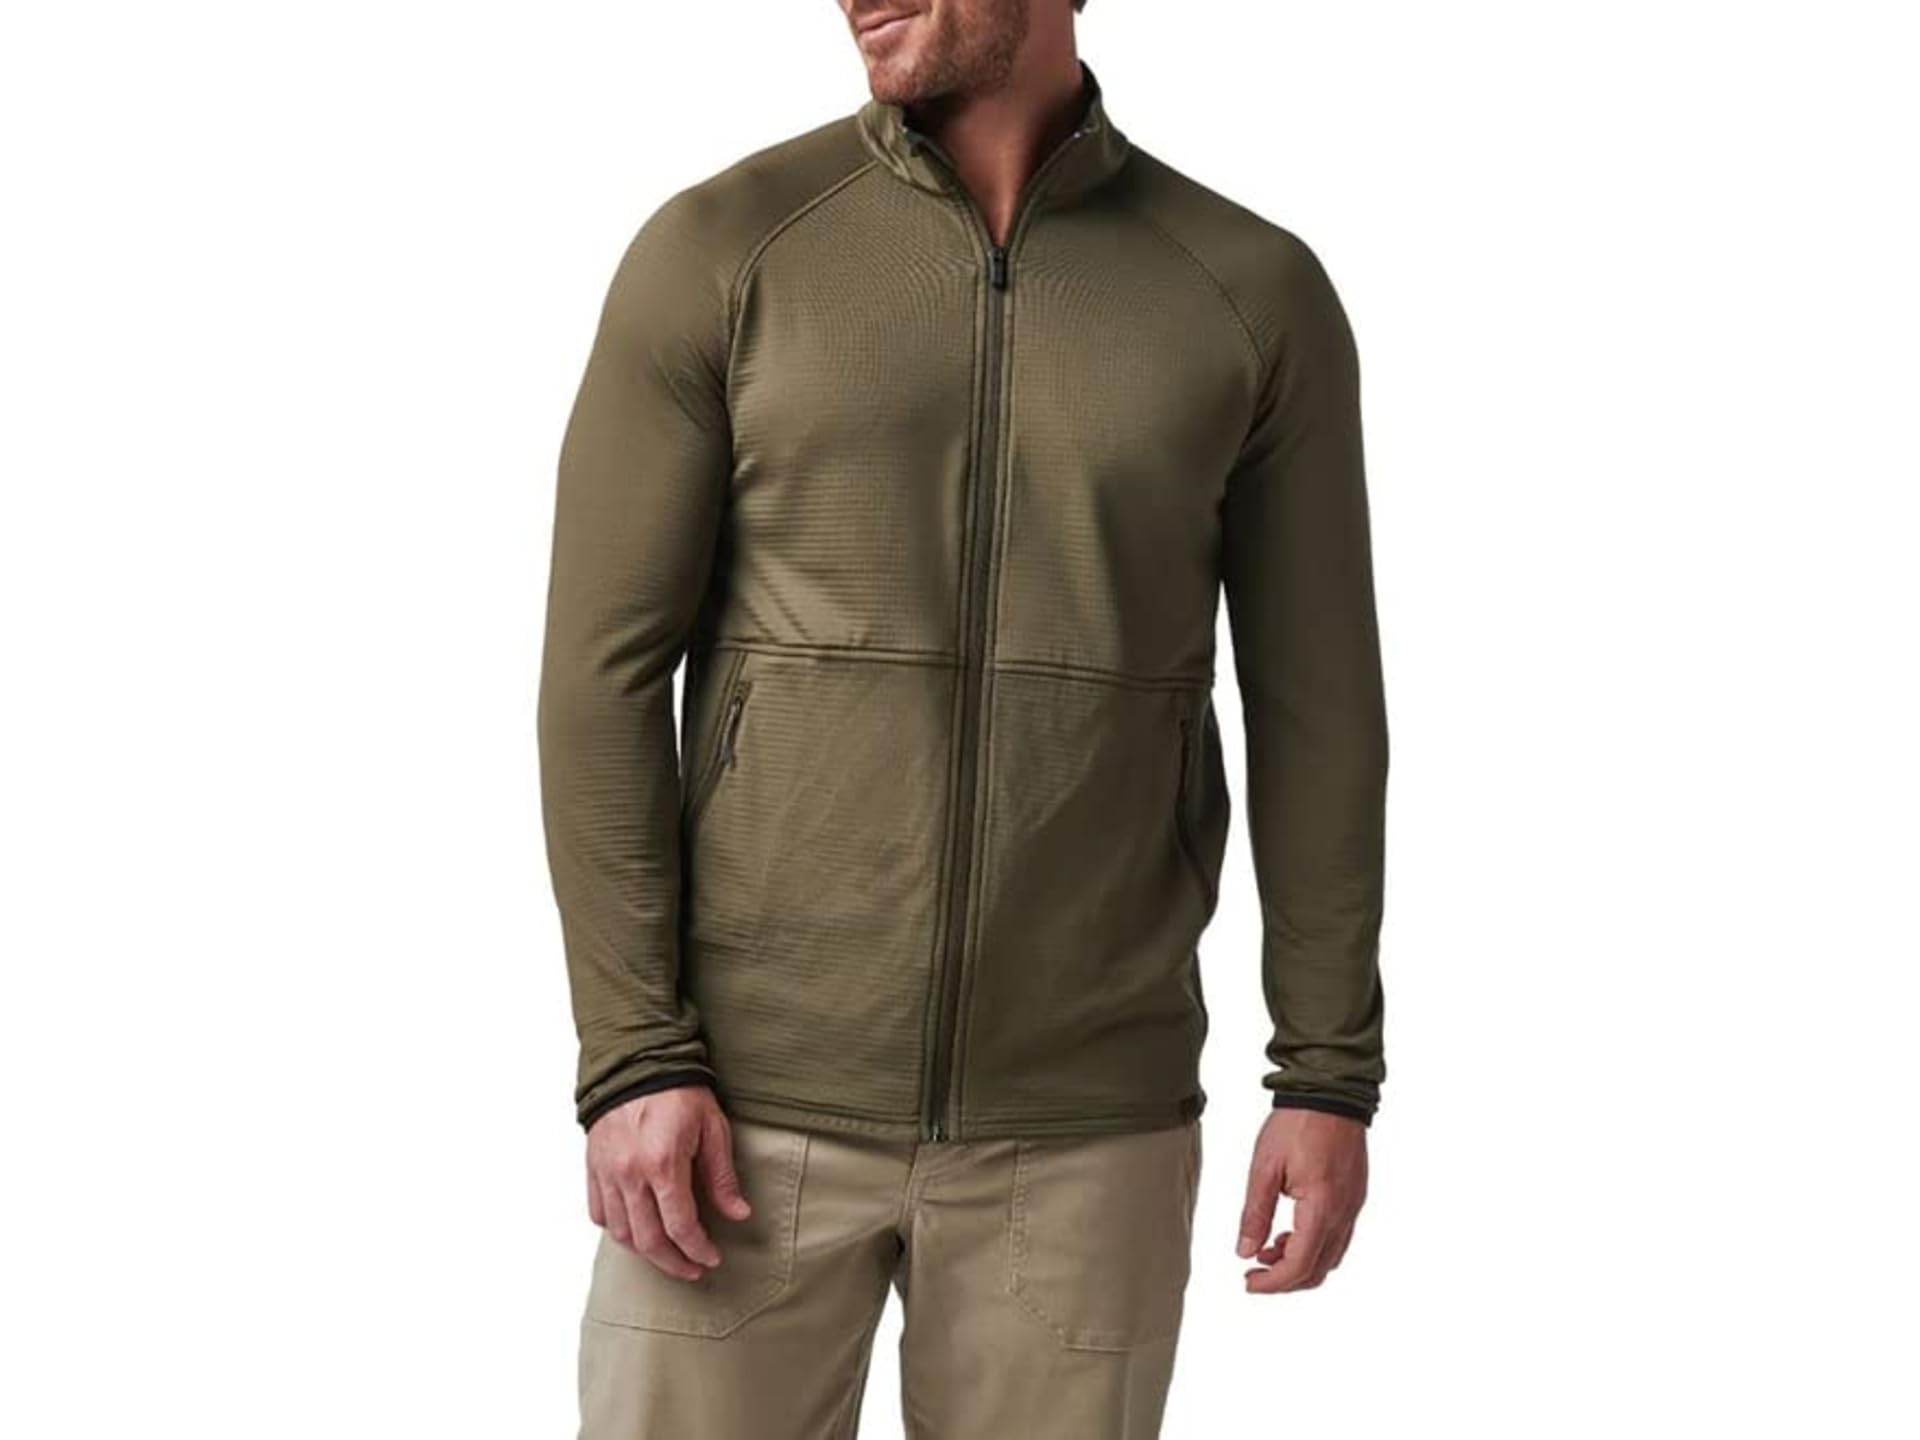 Мужская куртка Stratos Full Zip от 5.11 Tactical 5.11 Tactical